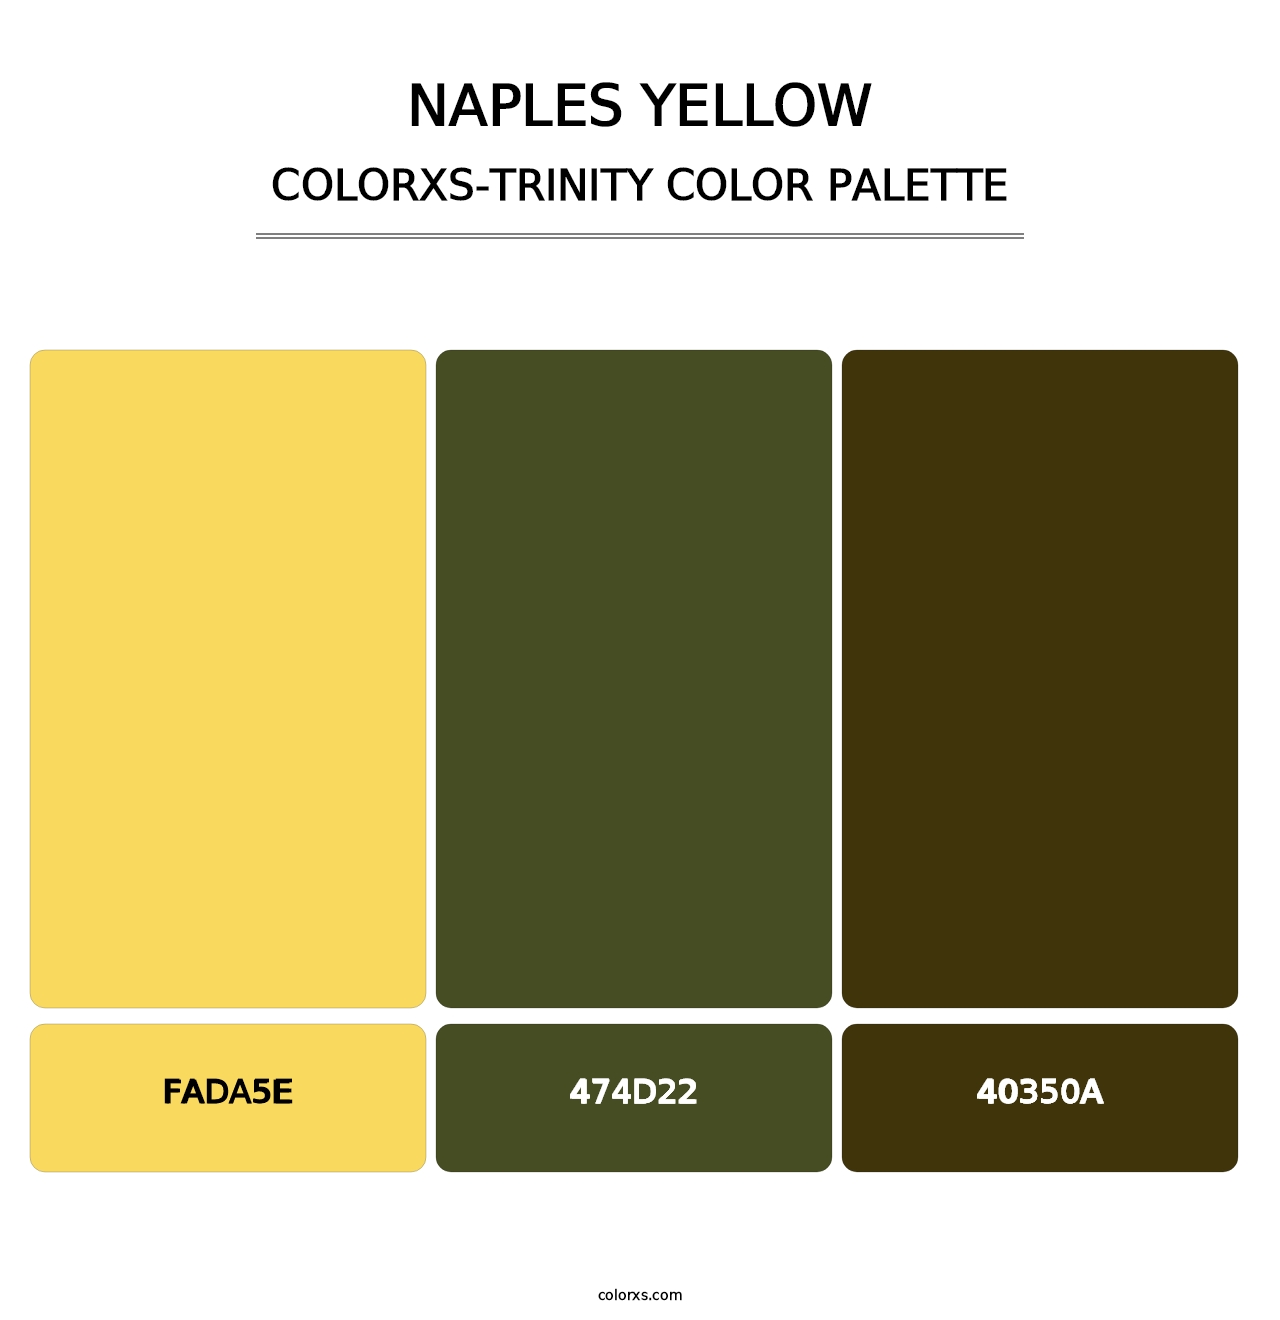 Naples Yellow - Colorxs Trinity Palette